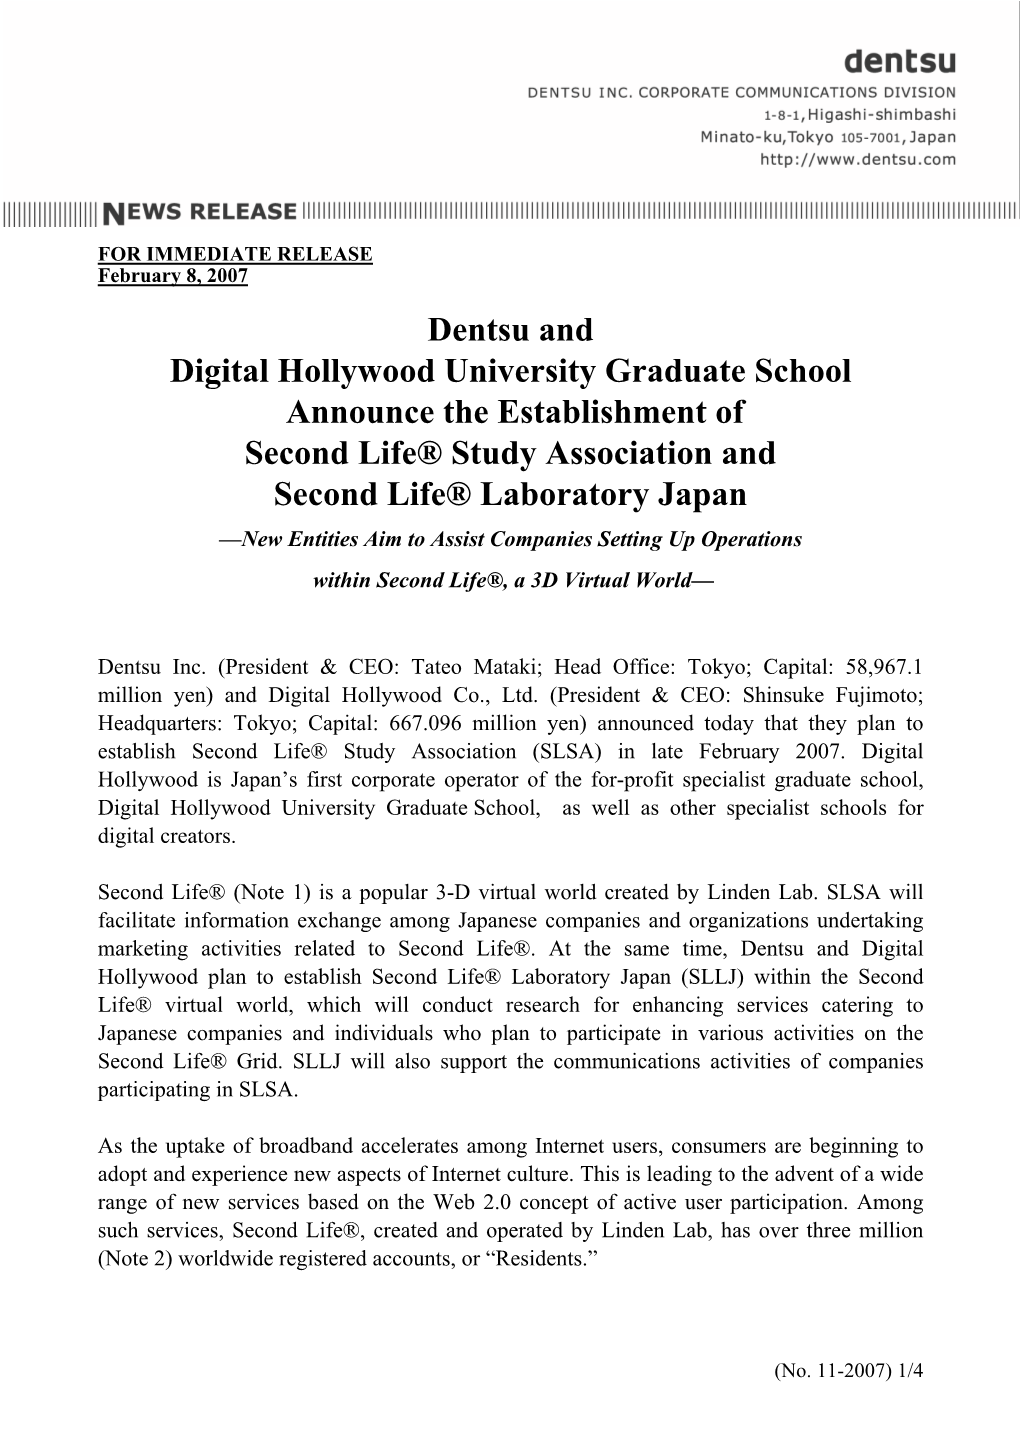 Dentsu and Digital Hollywood University Graduate School